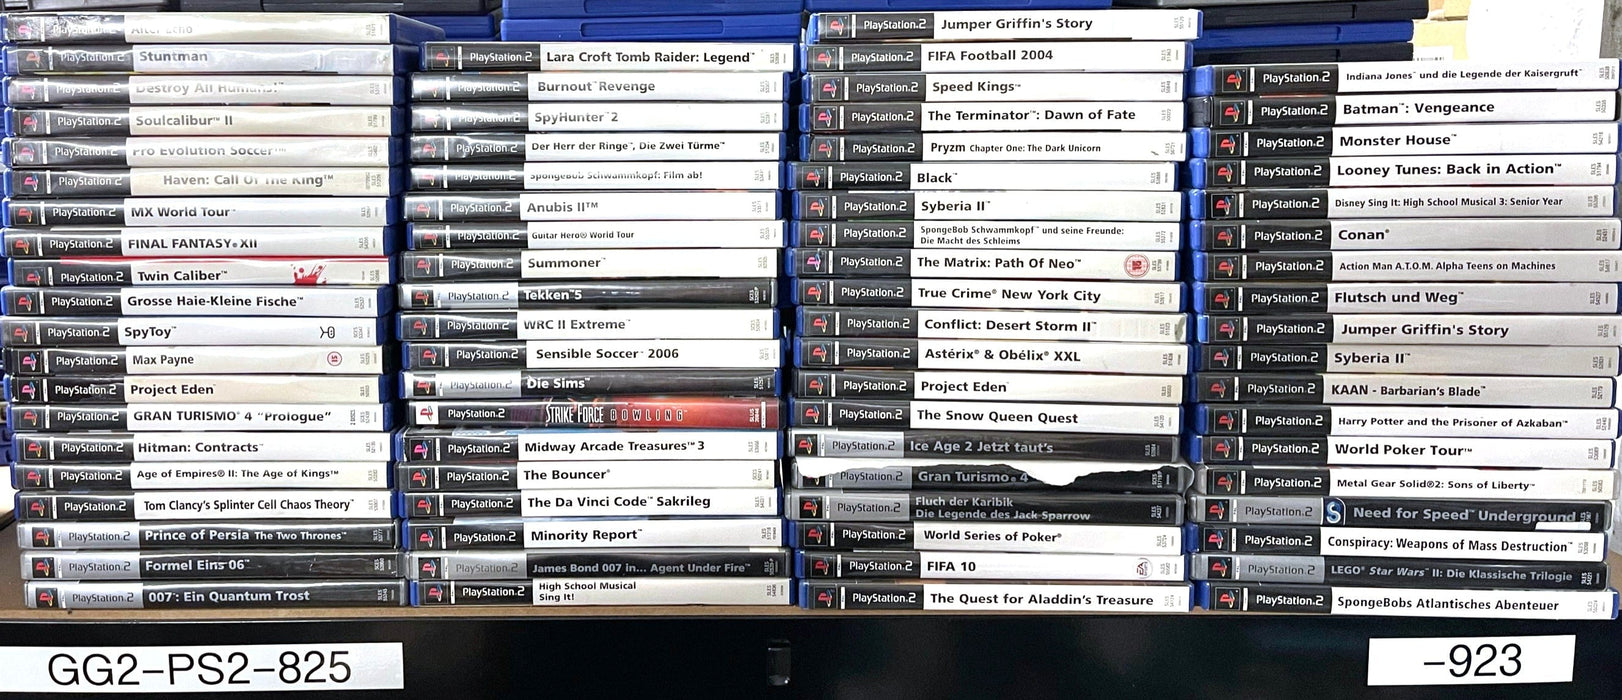 Glaciergames PlayStation 2 Game Call of Duty 2 Big Red One - [Platinum] PlayStation 2 (Nr.393)